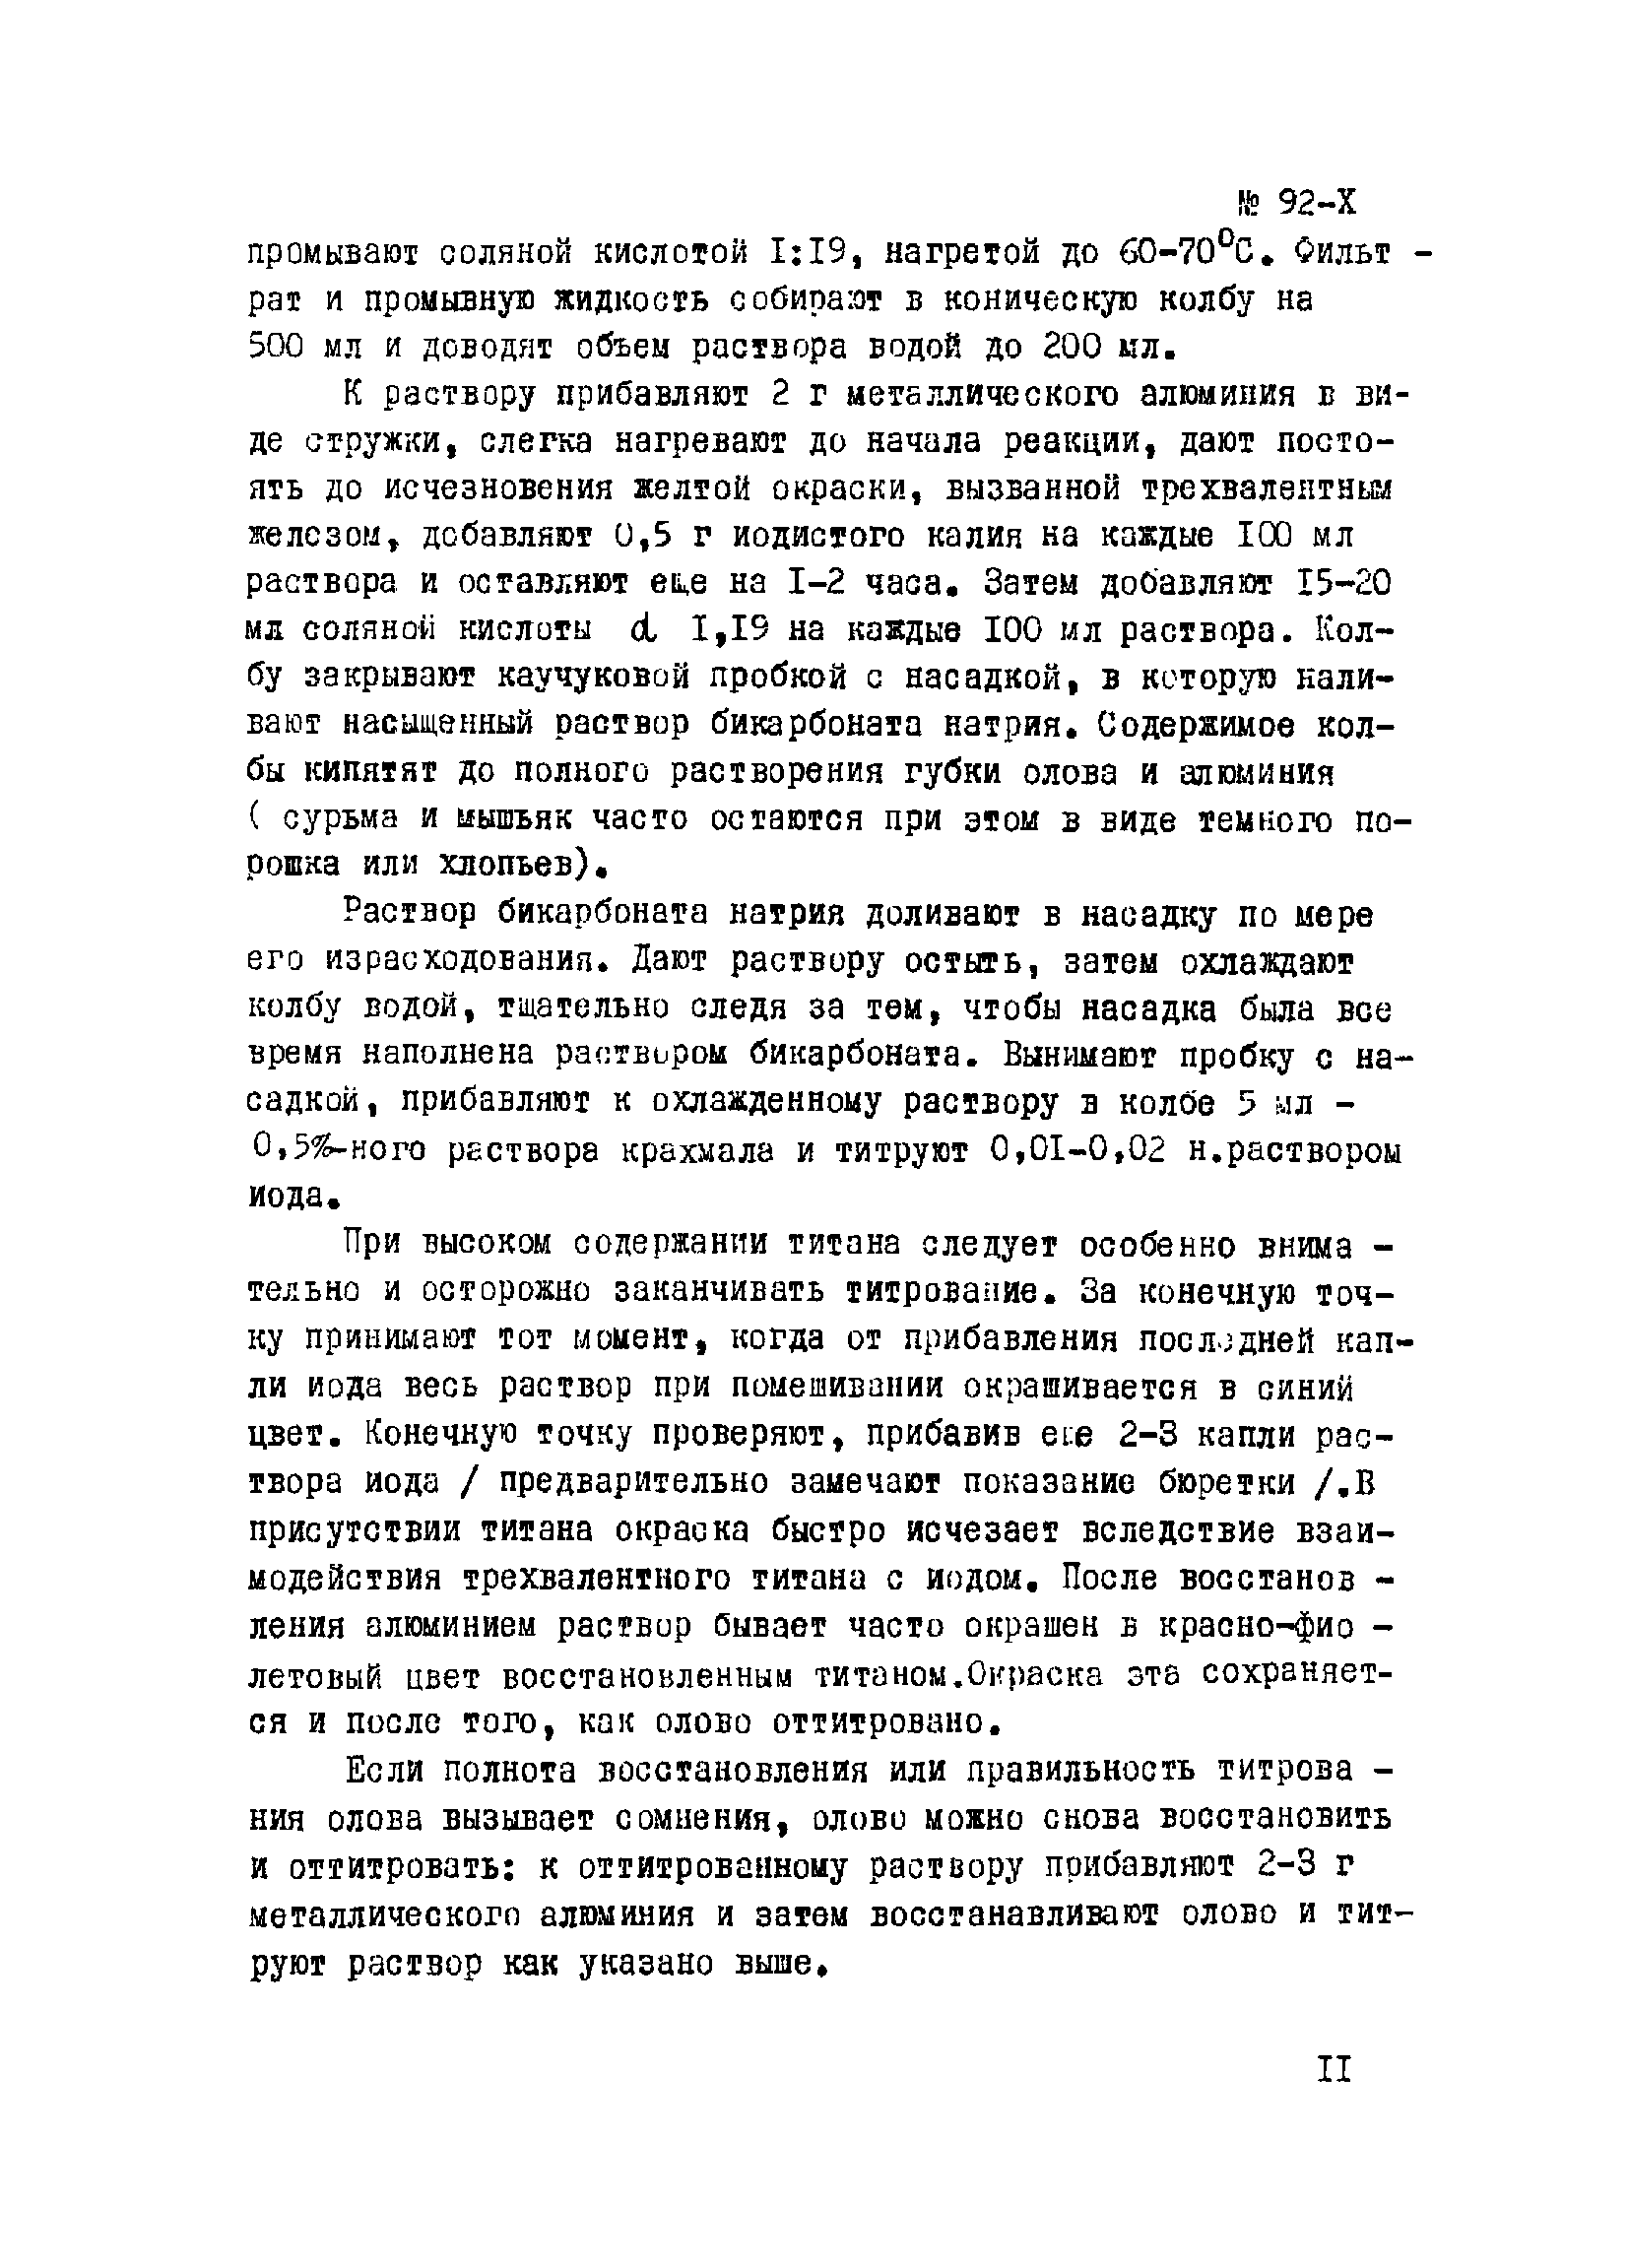 Инструкция НСАМ 92-Х